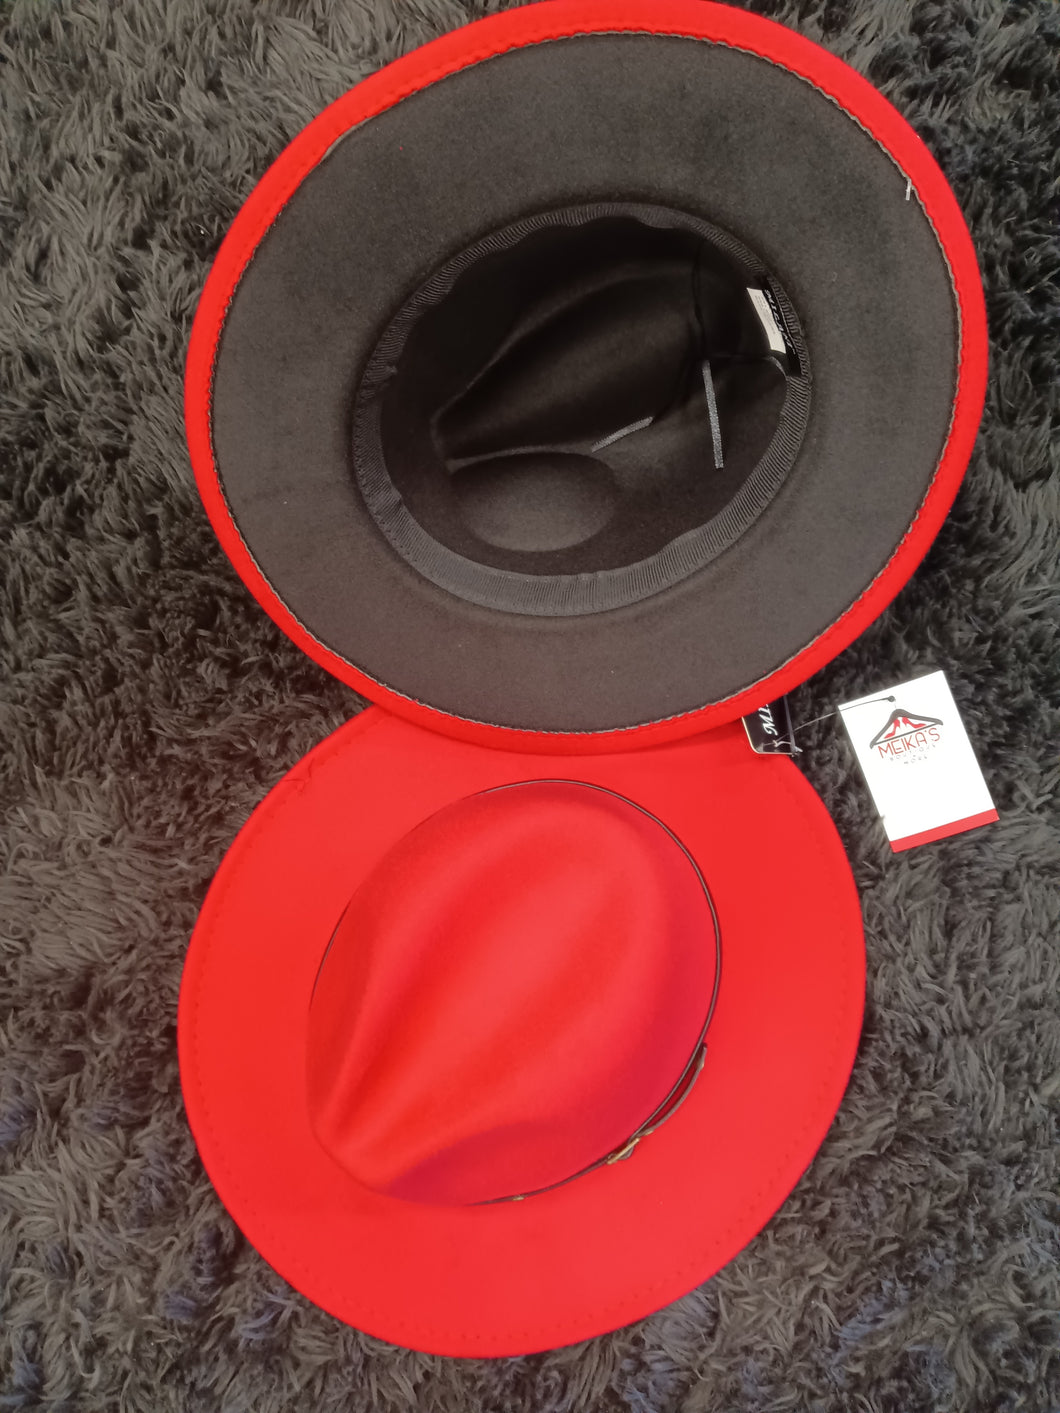 Red Fedora Hat with Black Bottom Adjustable Strings inside